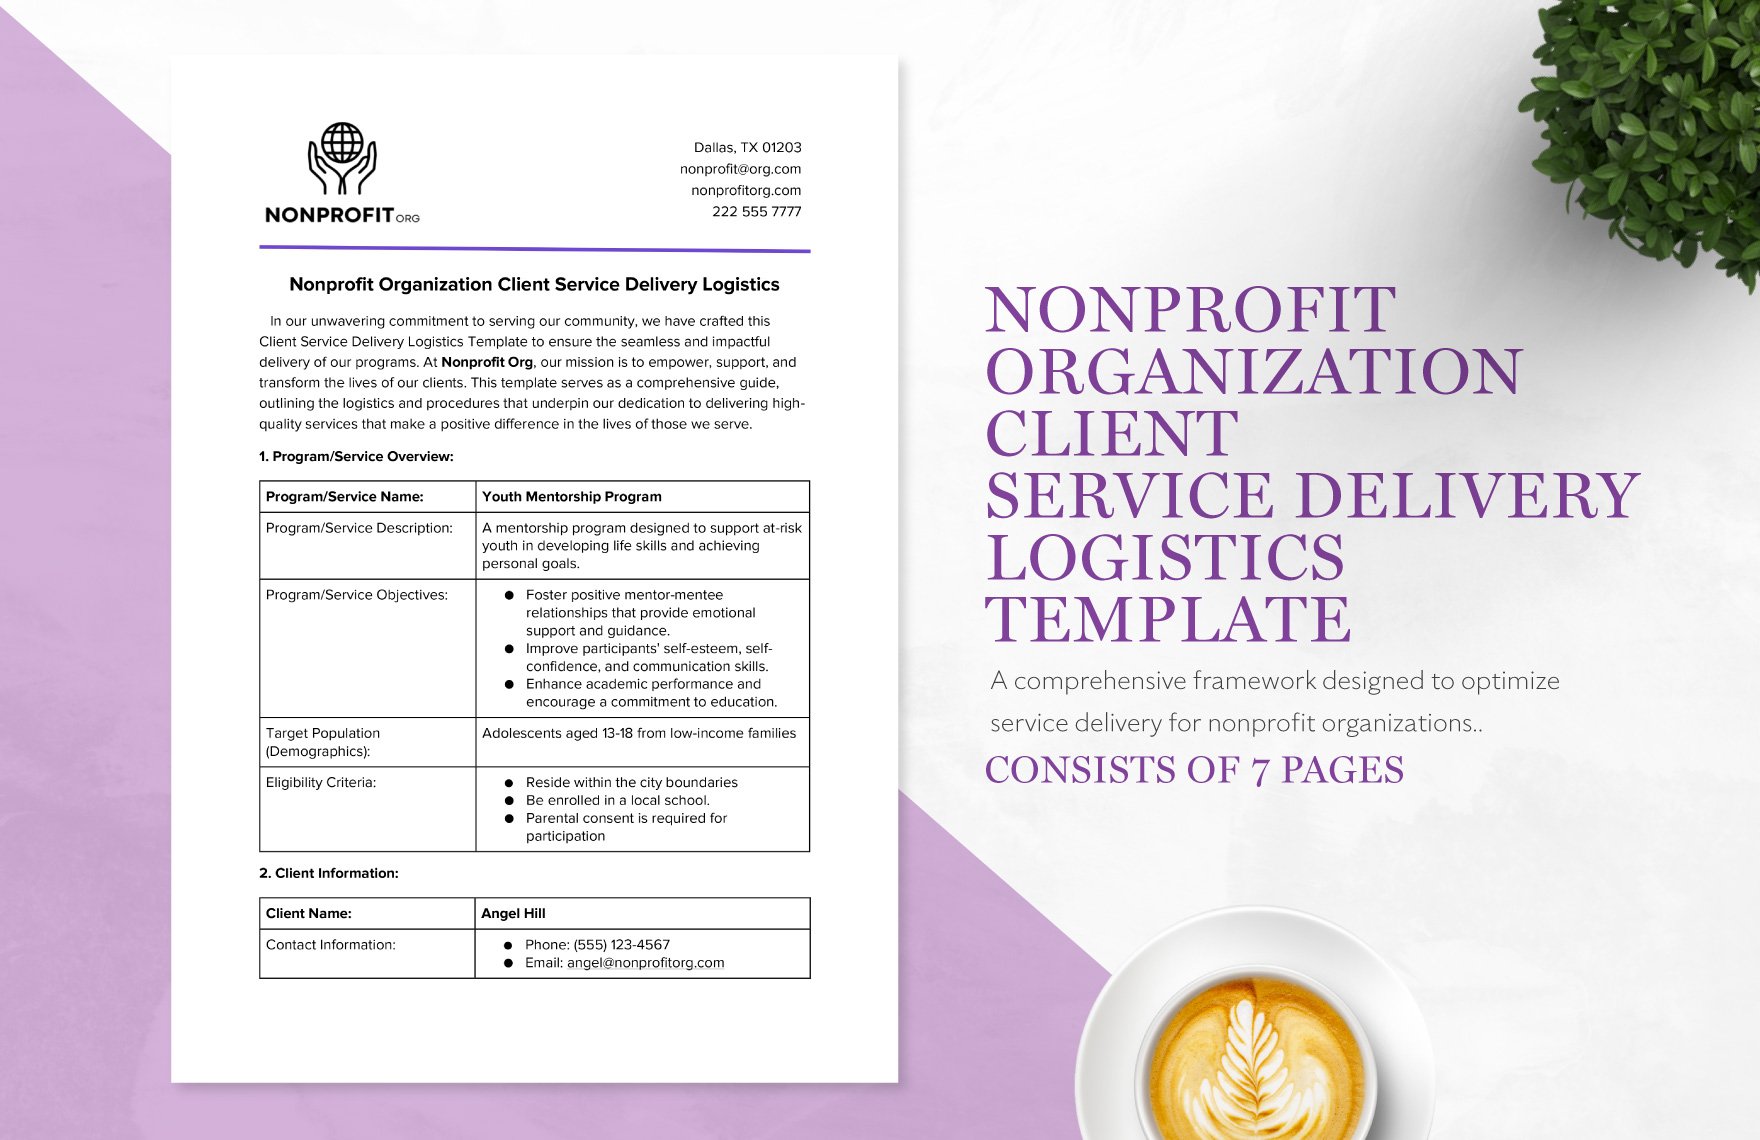 Nonprofit Organization Client Service Delivery Logistics Template in Word, Google Docs, PDF